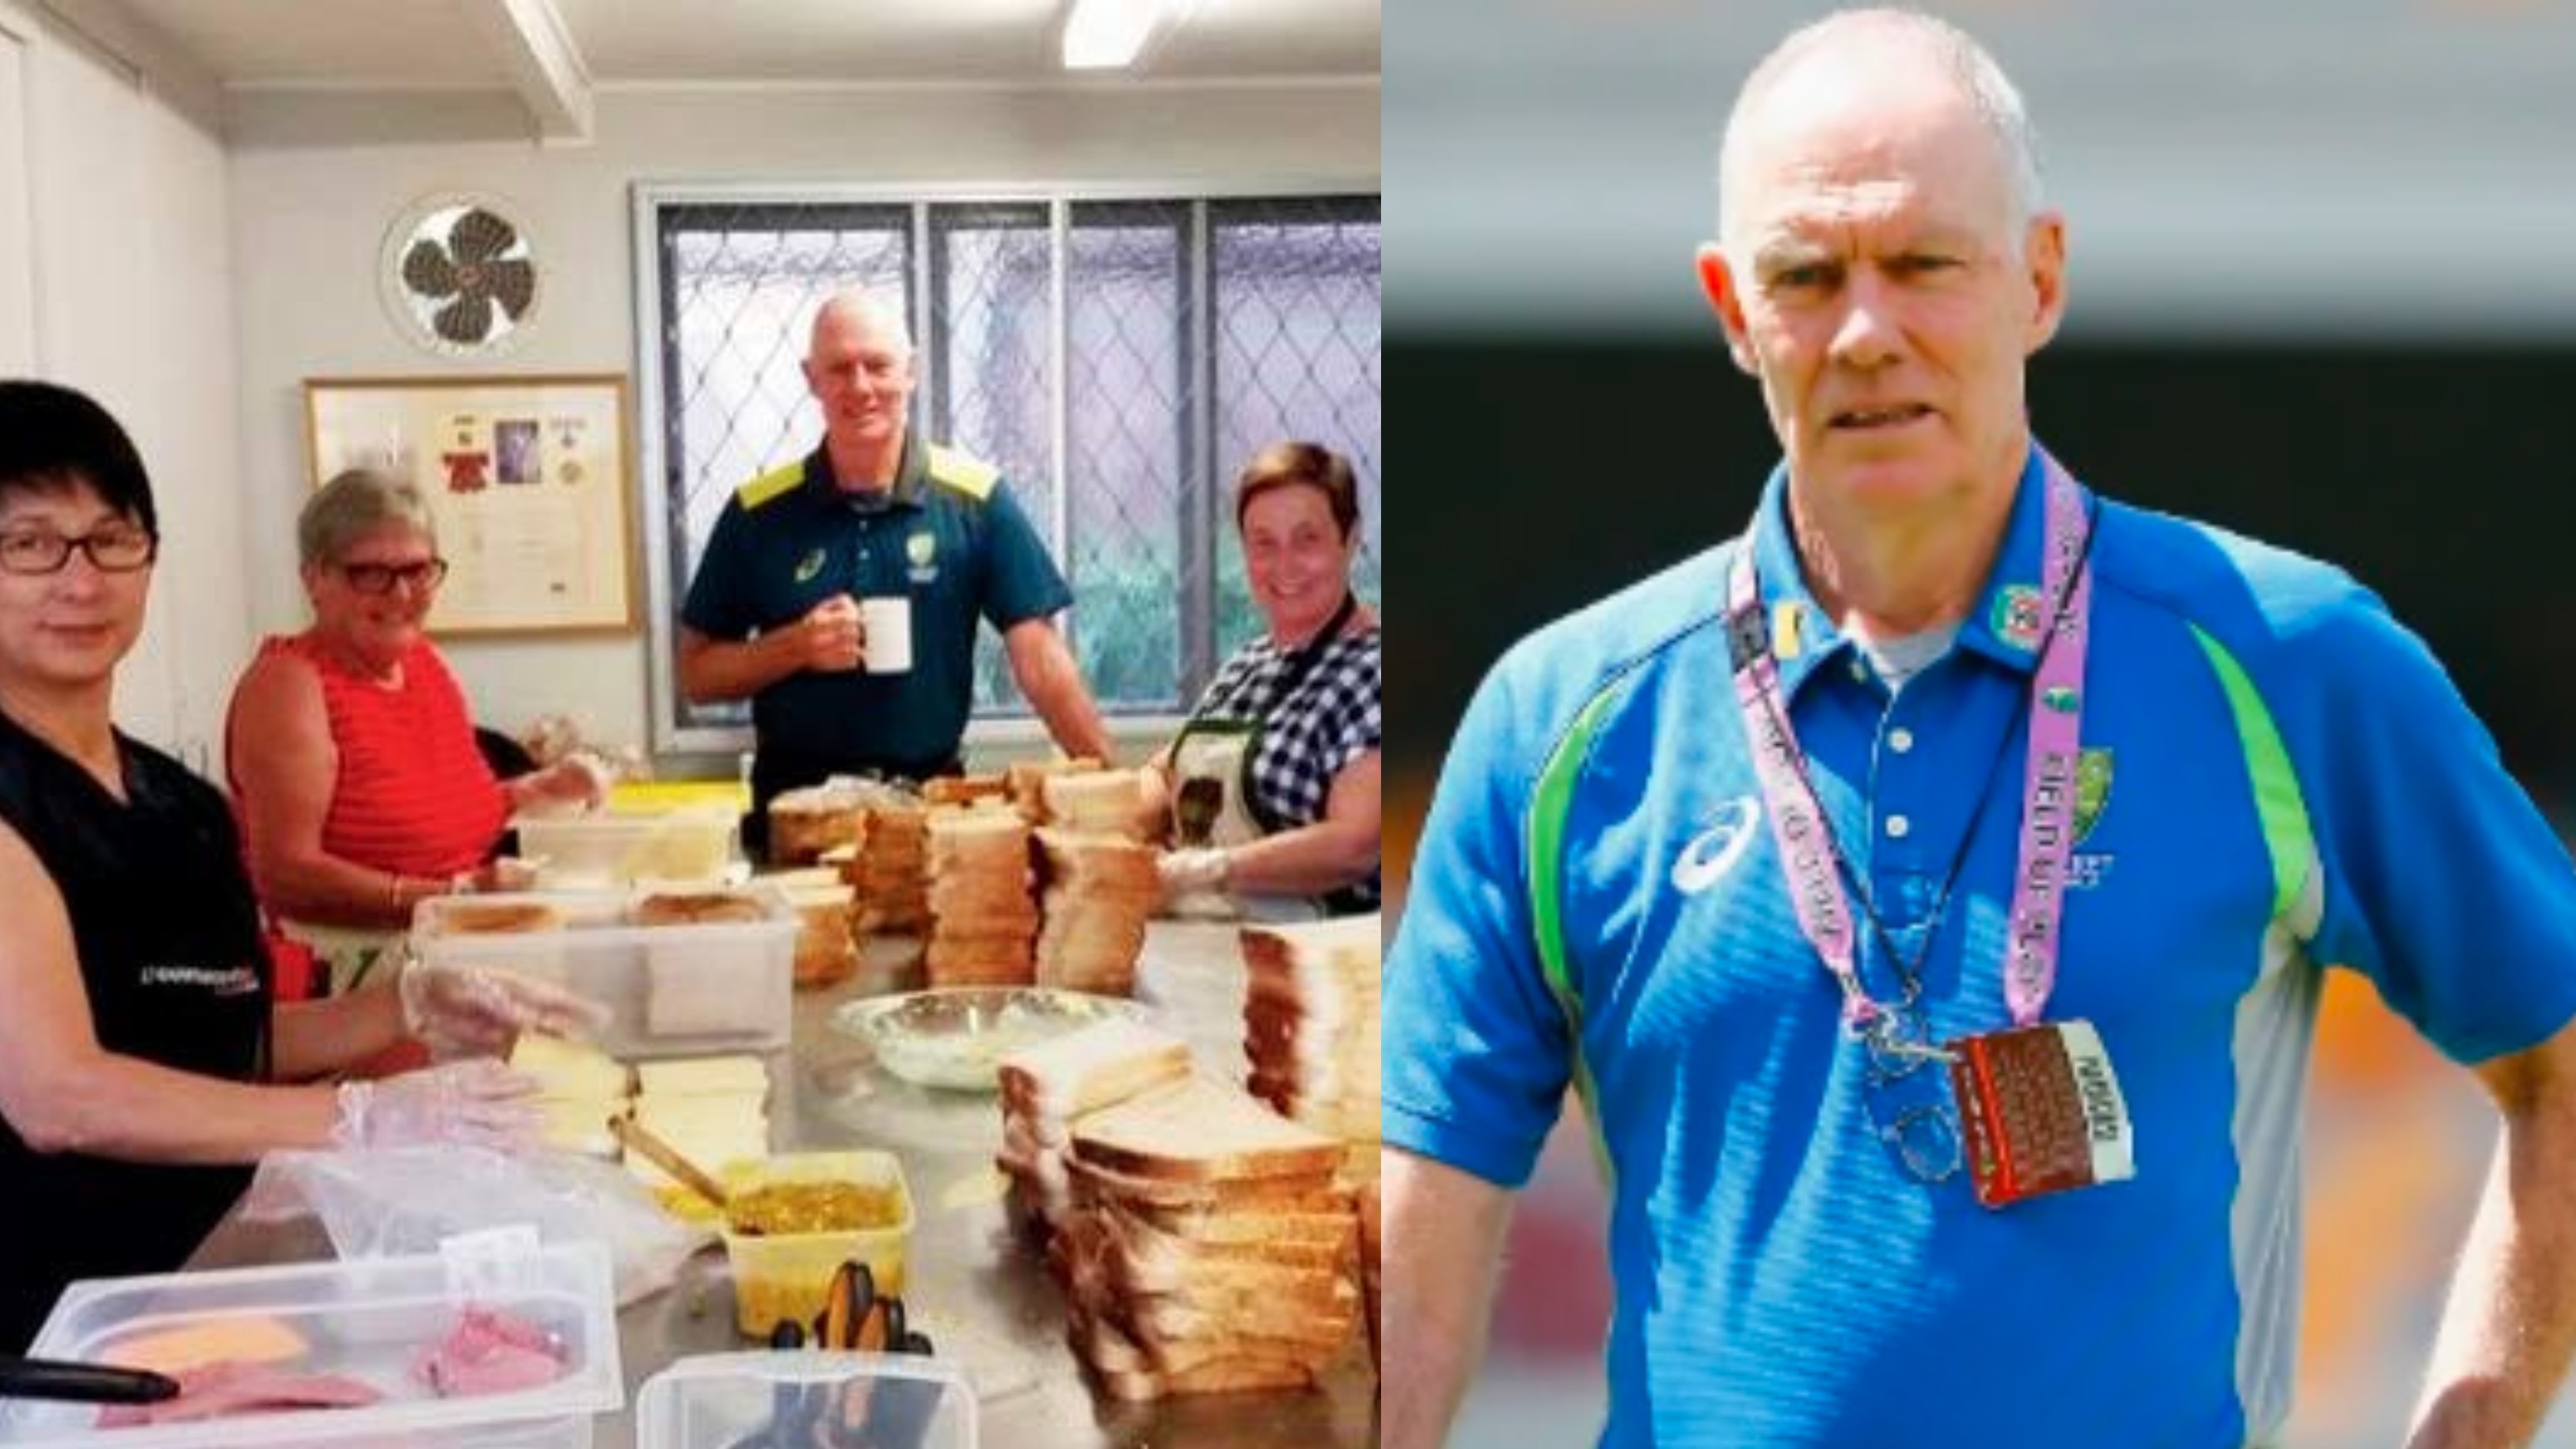 Greg Chappell's Breakfast Charity feeds 44,000 homeless people in Brisbane